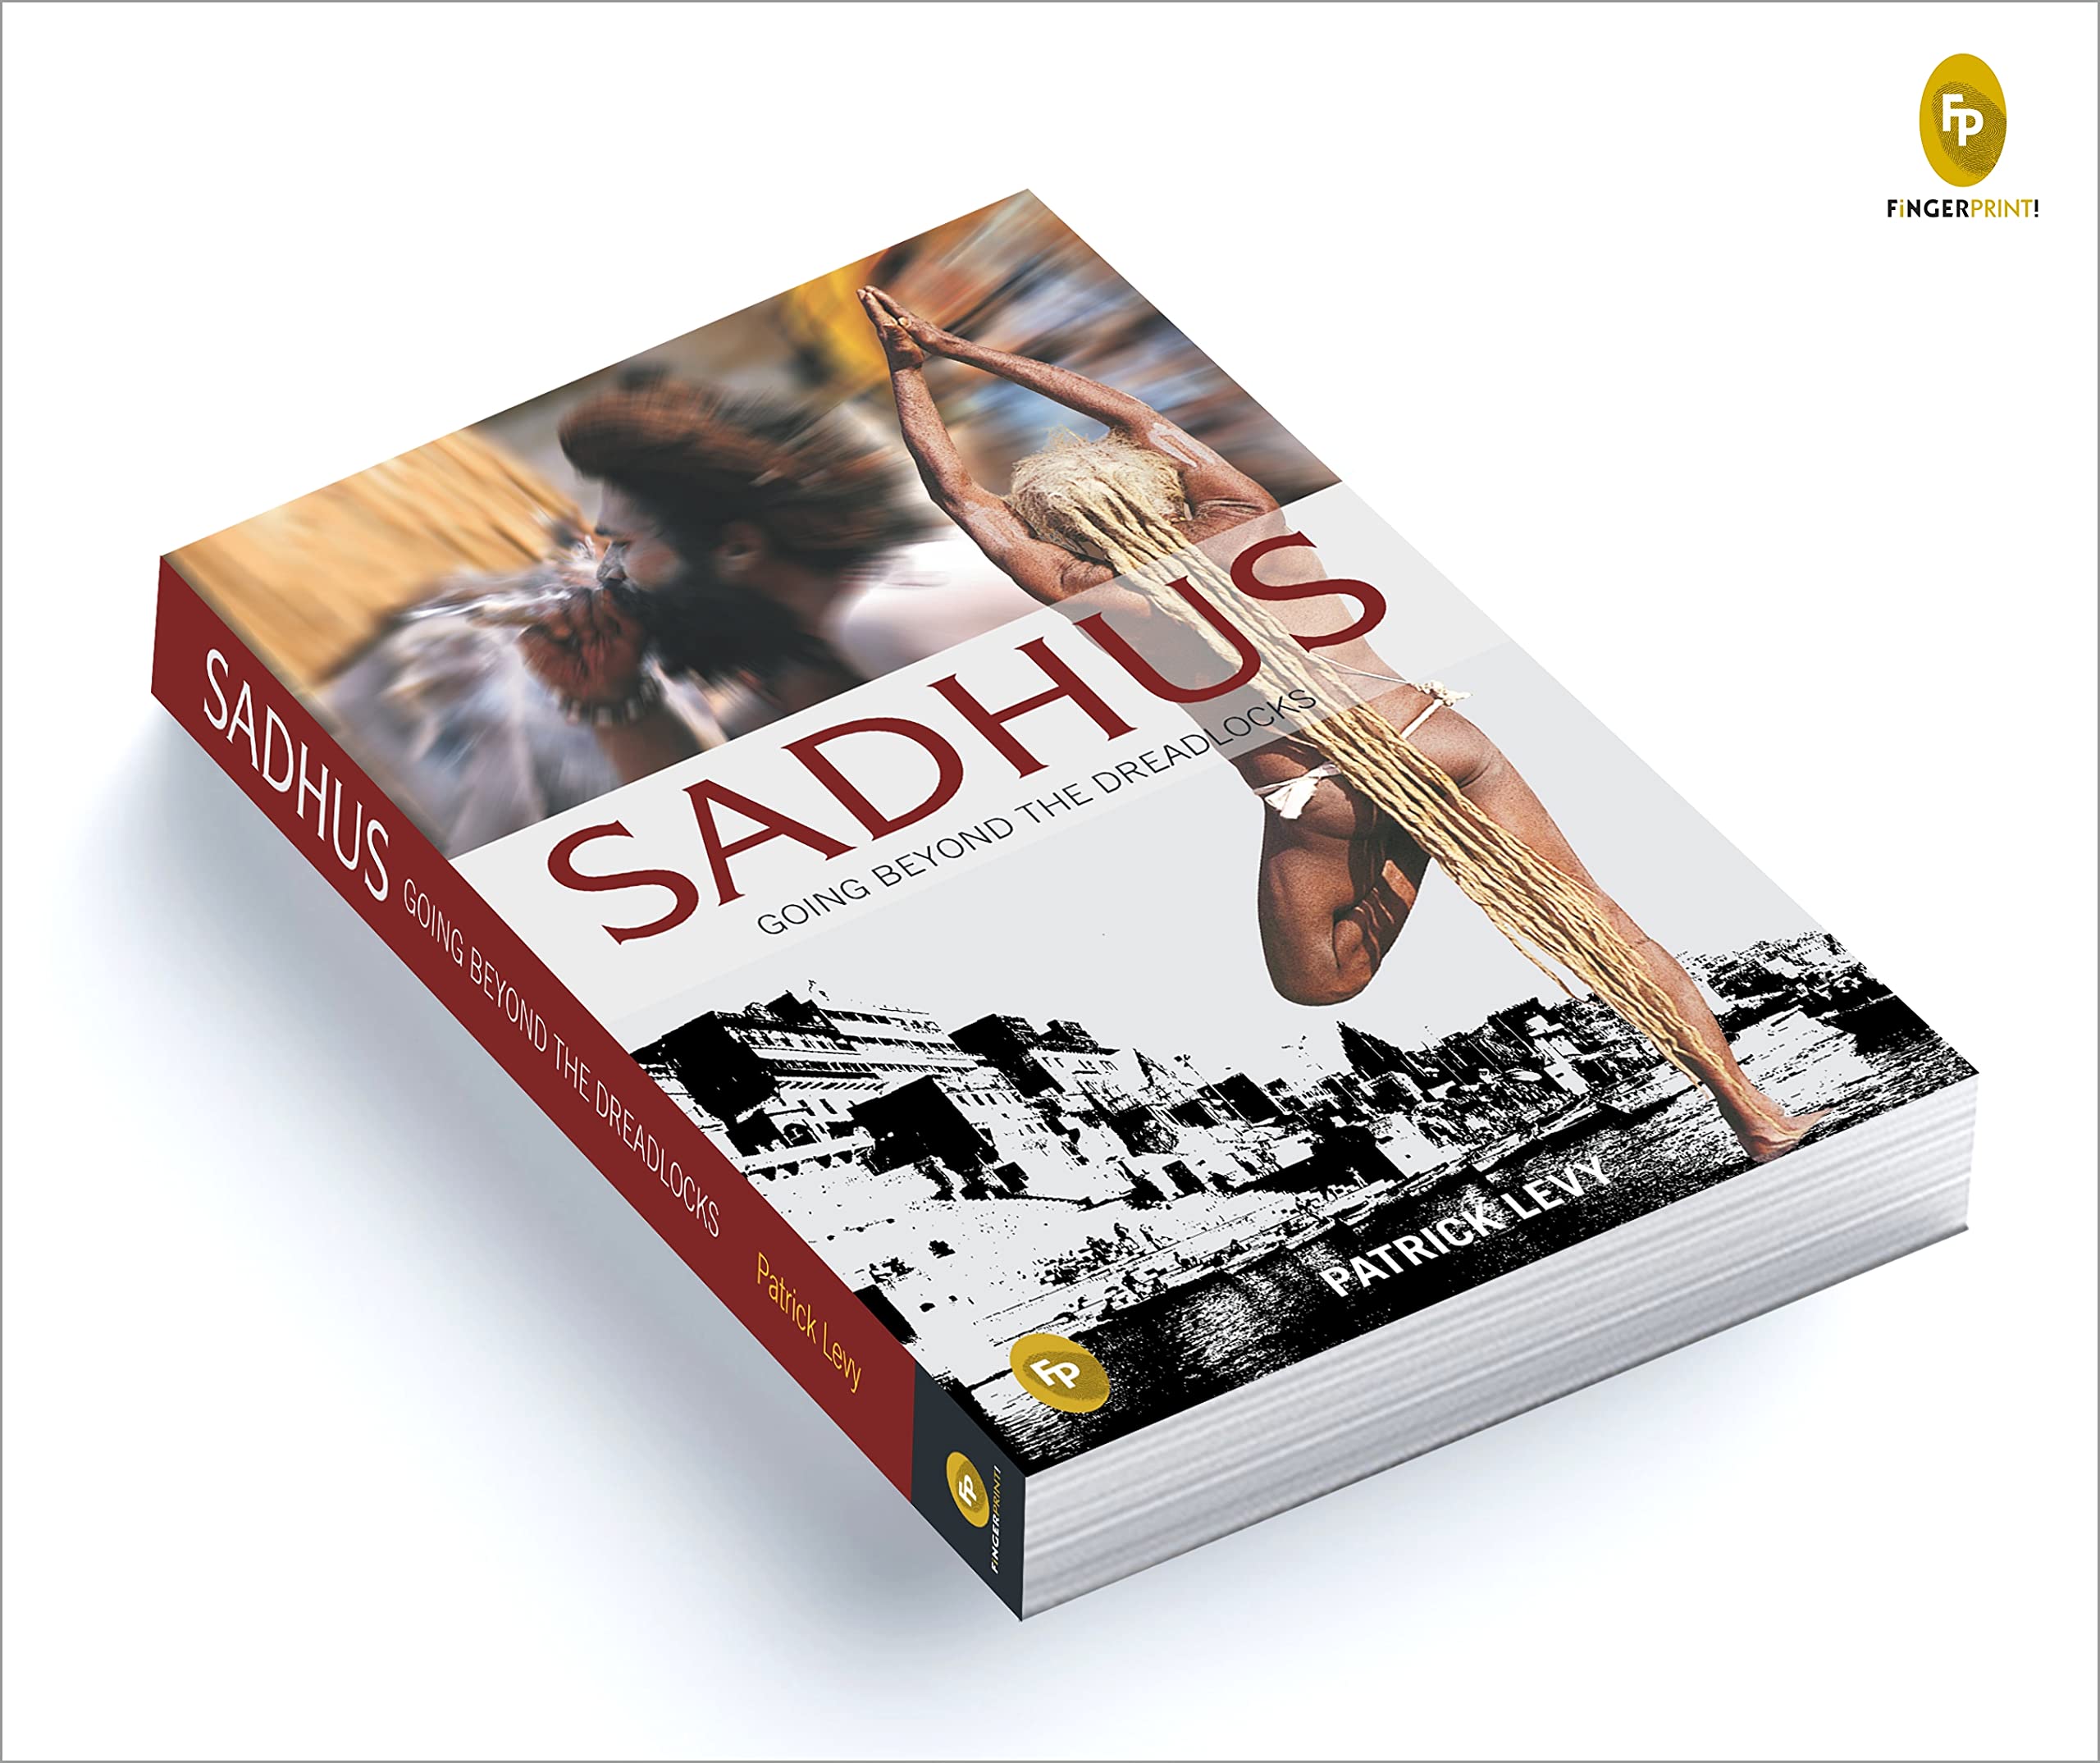 Sadhus: Going Beyond The Dreadlocks